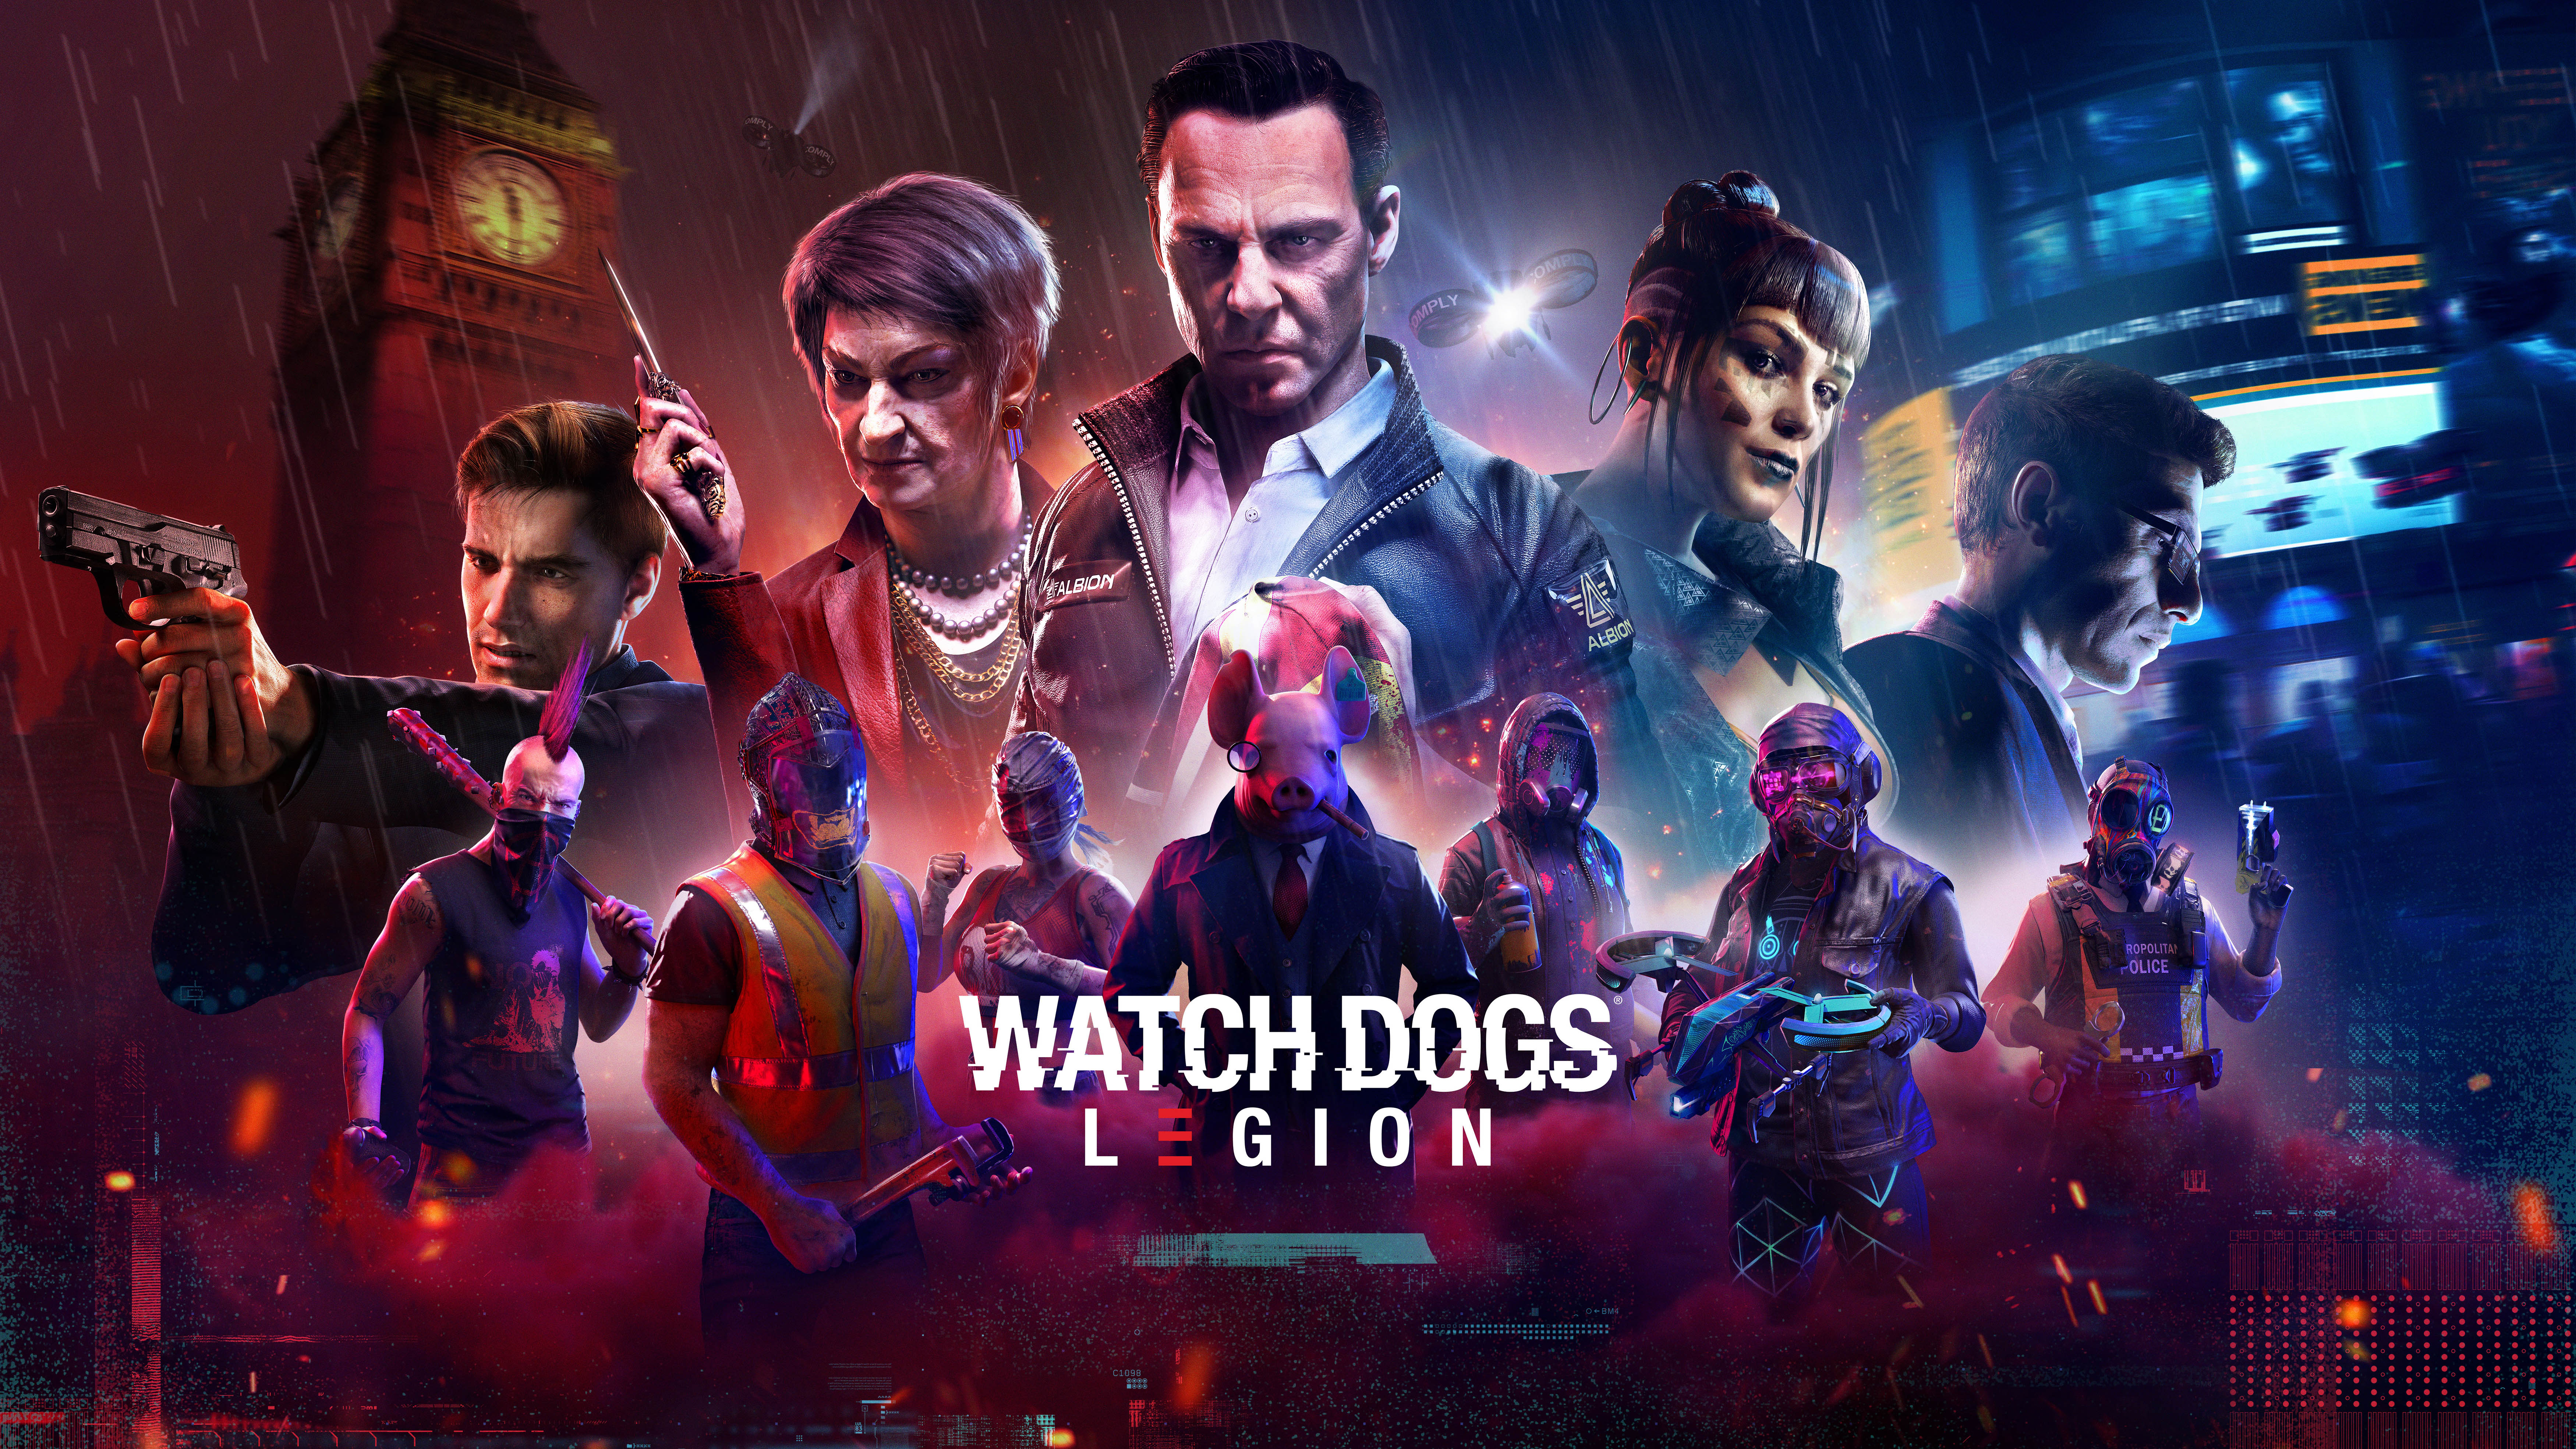 Watch Dogs Legion 4k Wallpaper Playstation 5 Playstation 4 Xbox Series X Xbox One Google Stadia Games 15